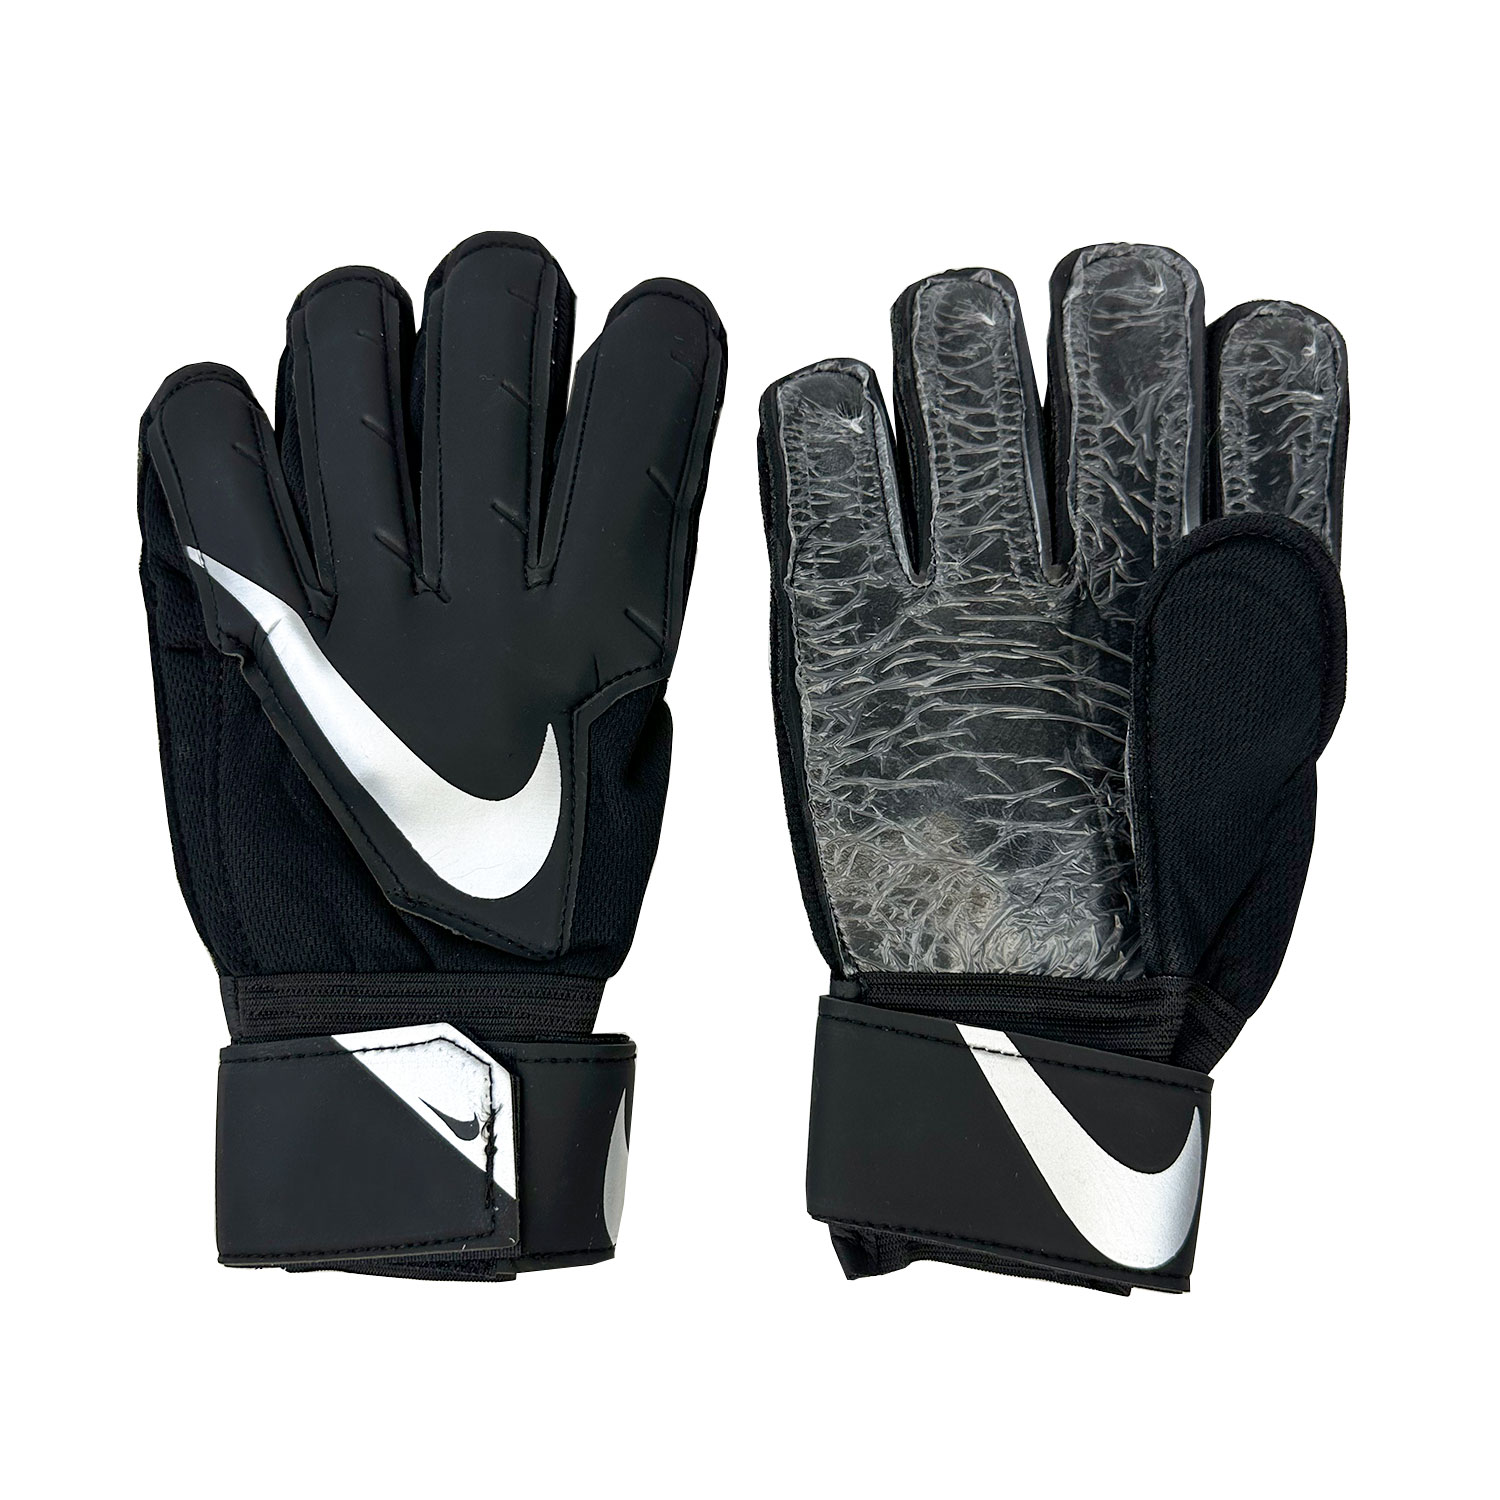 Вратарские перчатки Nike 